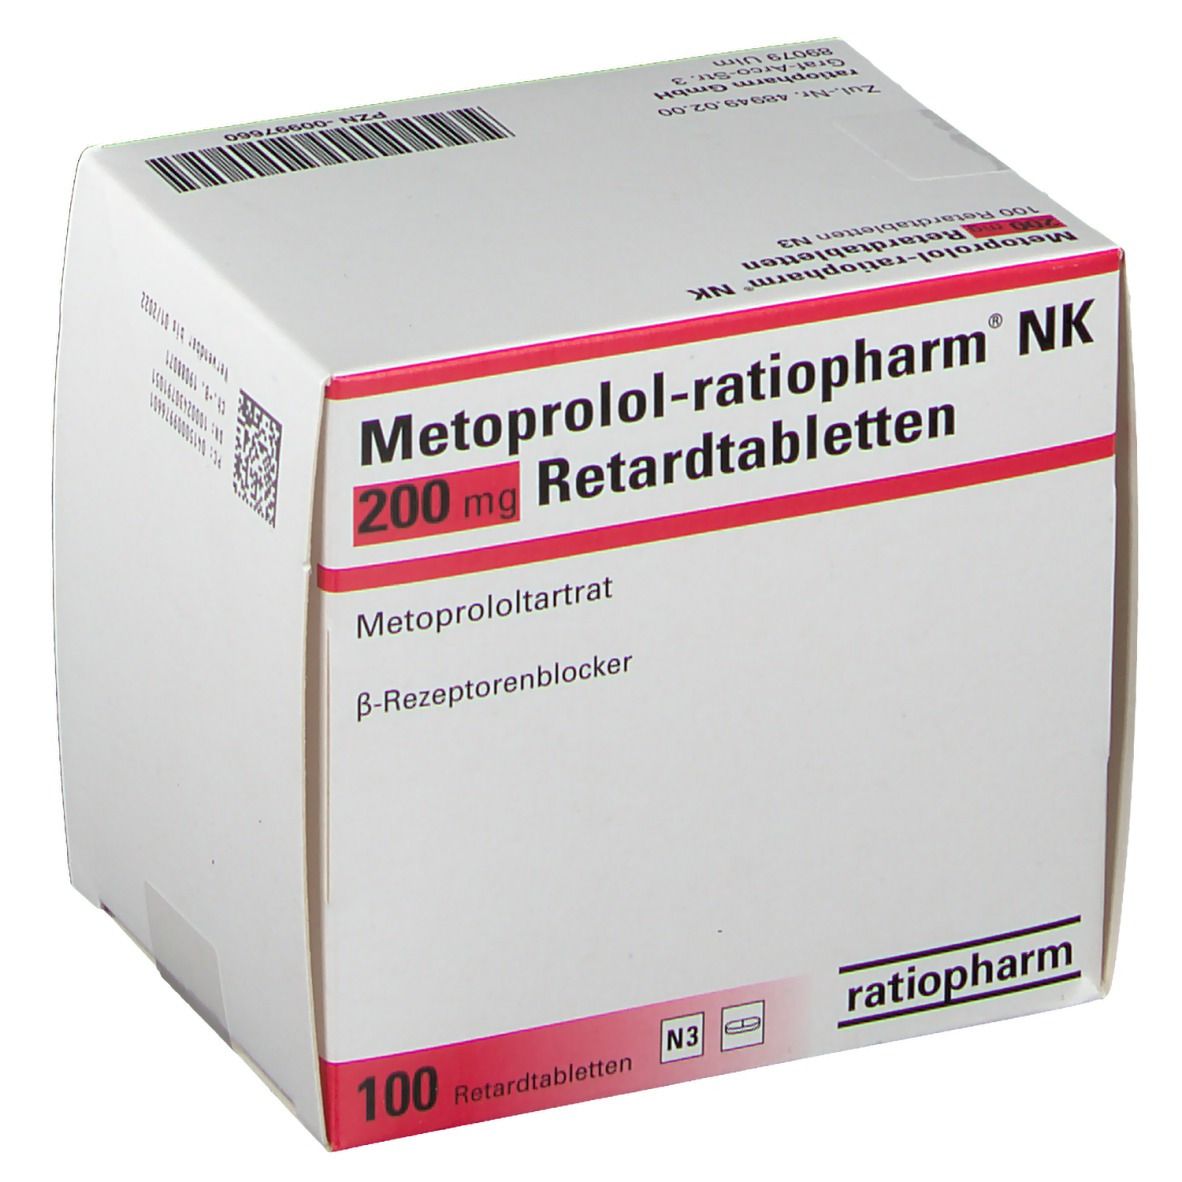 Metoprolol-ratiopharm® NK 200 mg